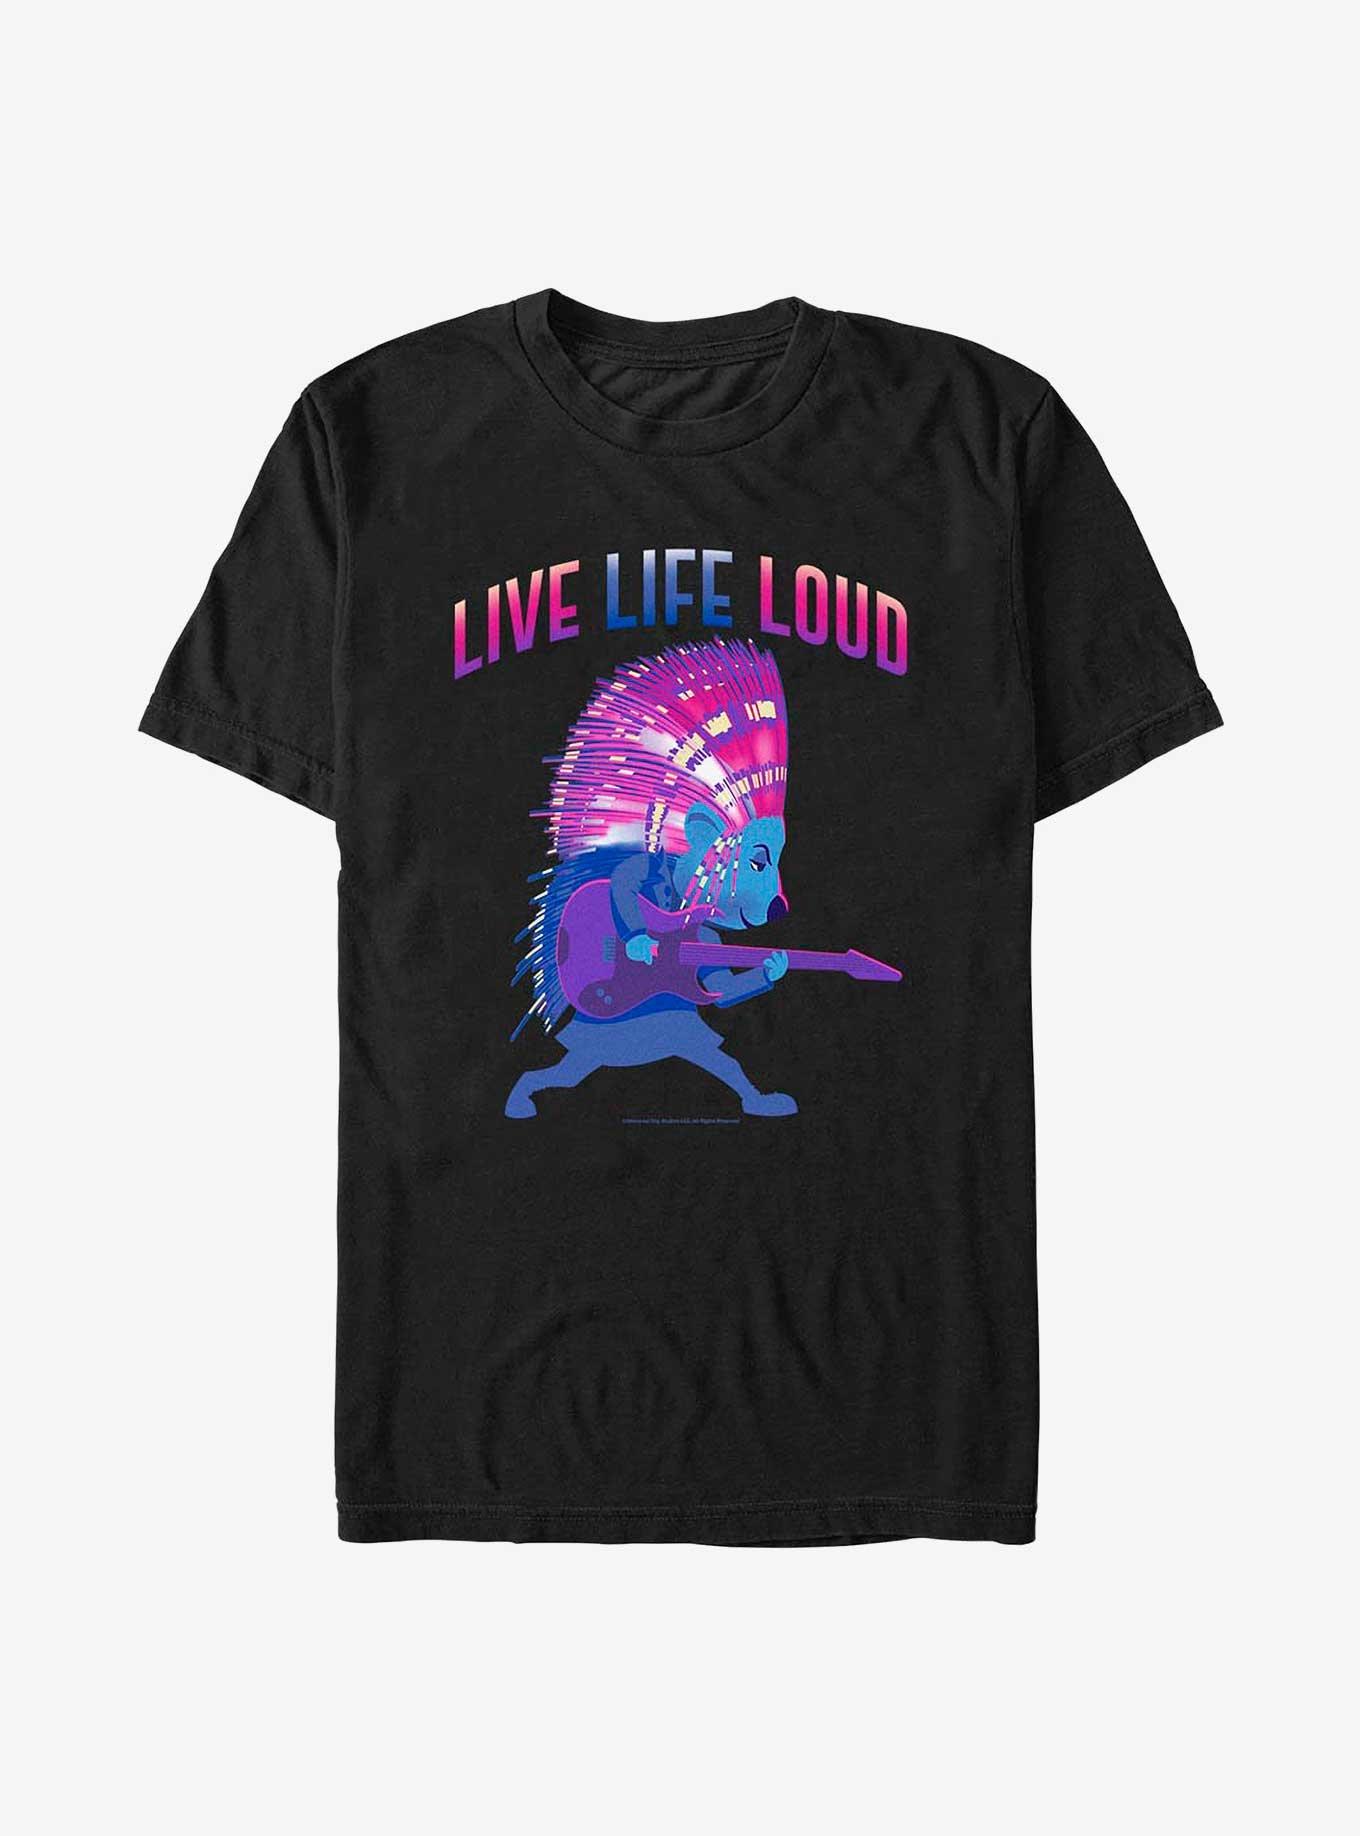 Sing Live Life Loud T-Shirt, BLACK, hi-res